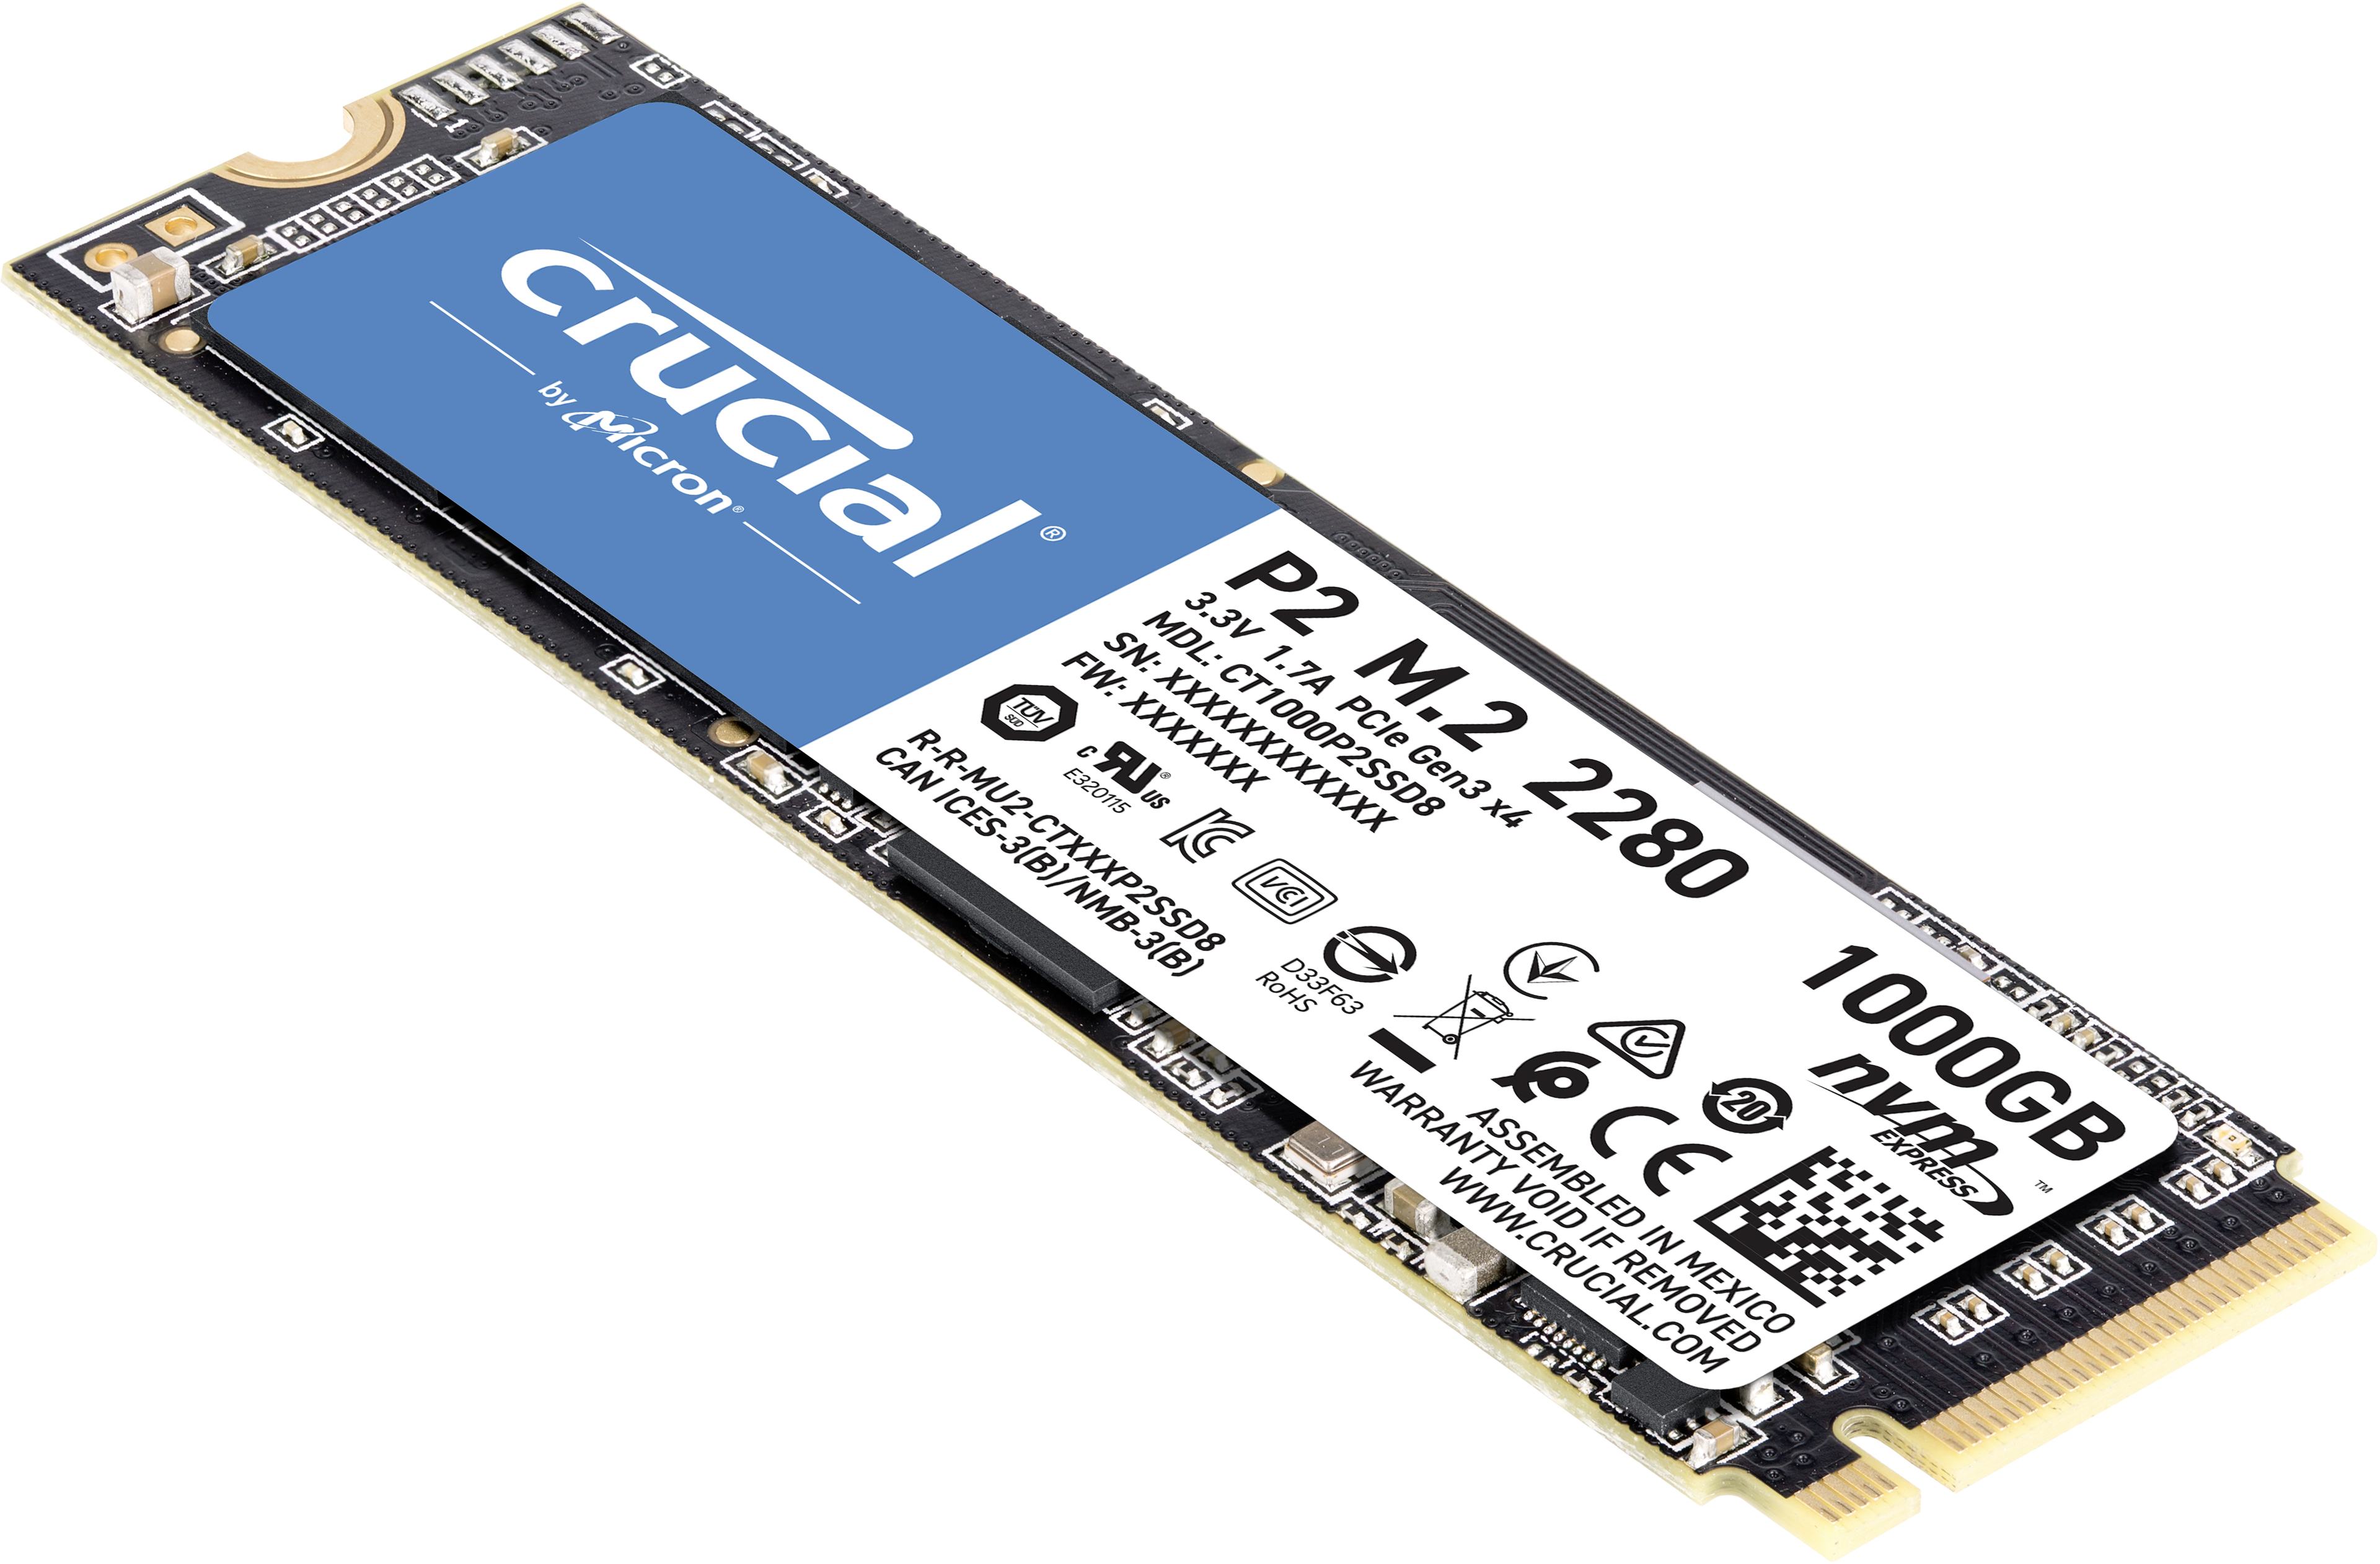 SSD intern M.2 P2 CRUCIAL Festplatte, TB PCIe, 1 via